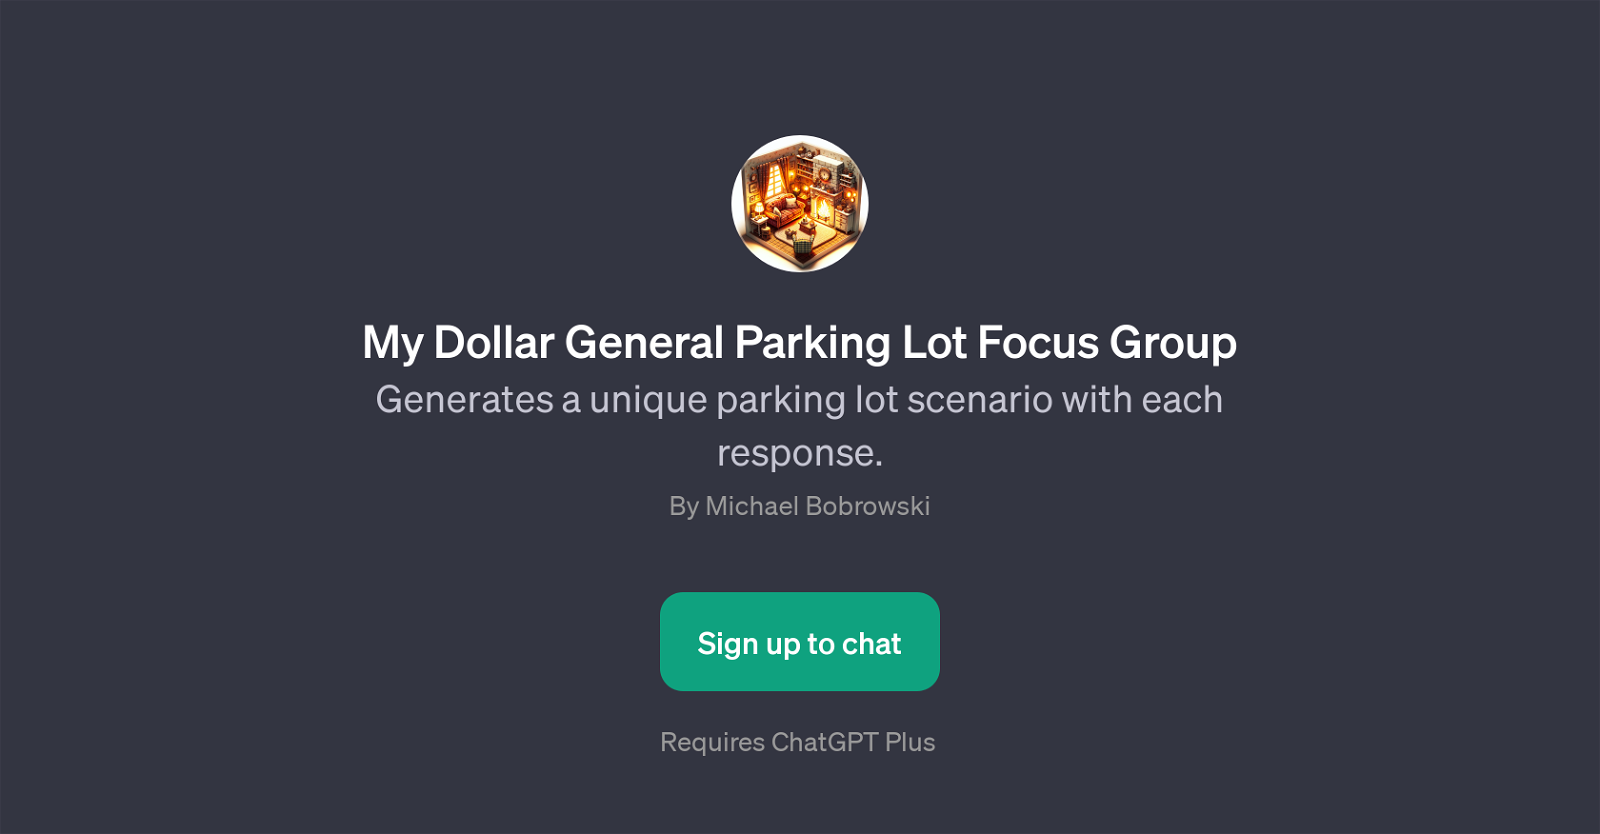 My Dollar General Parking Lot Focus Group website